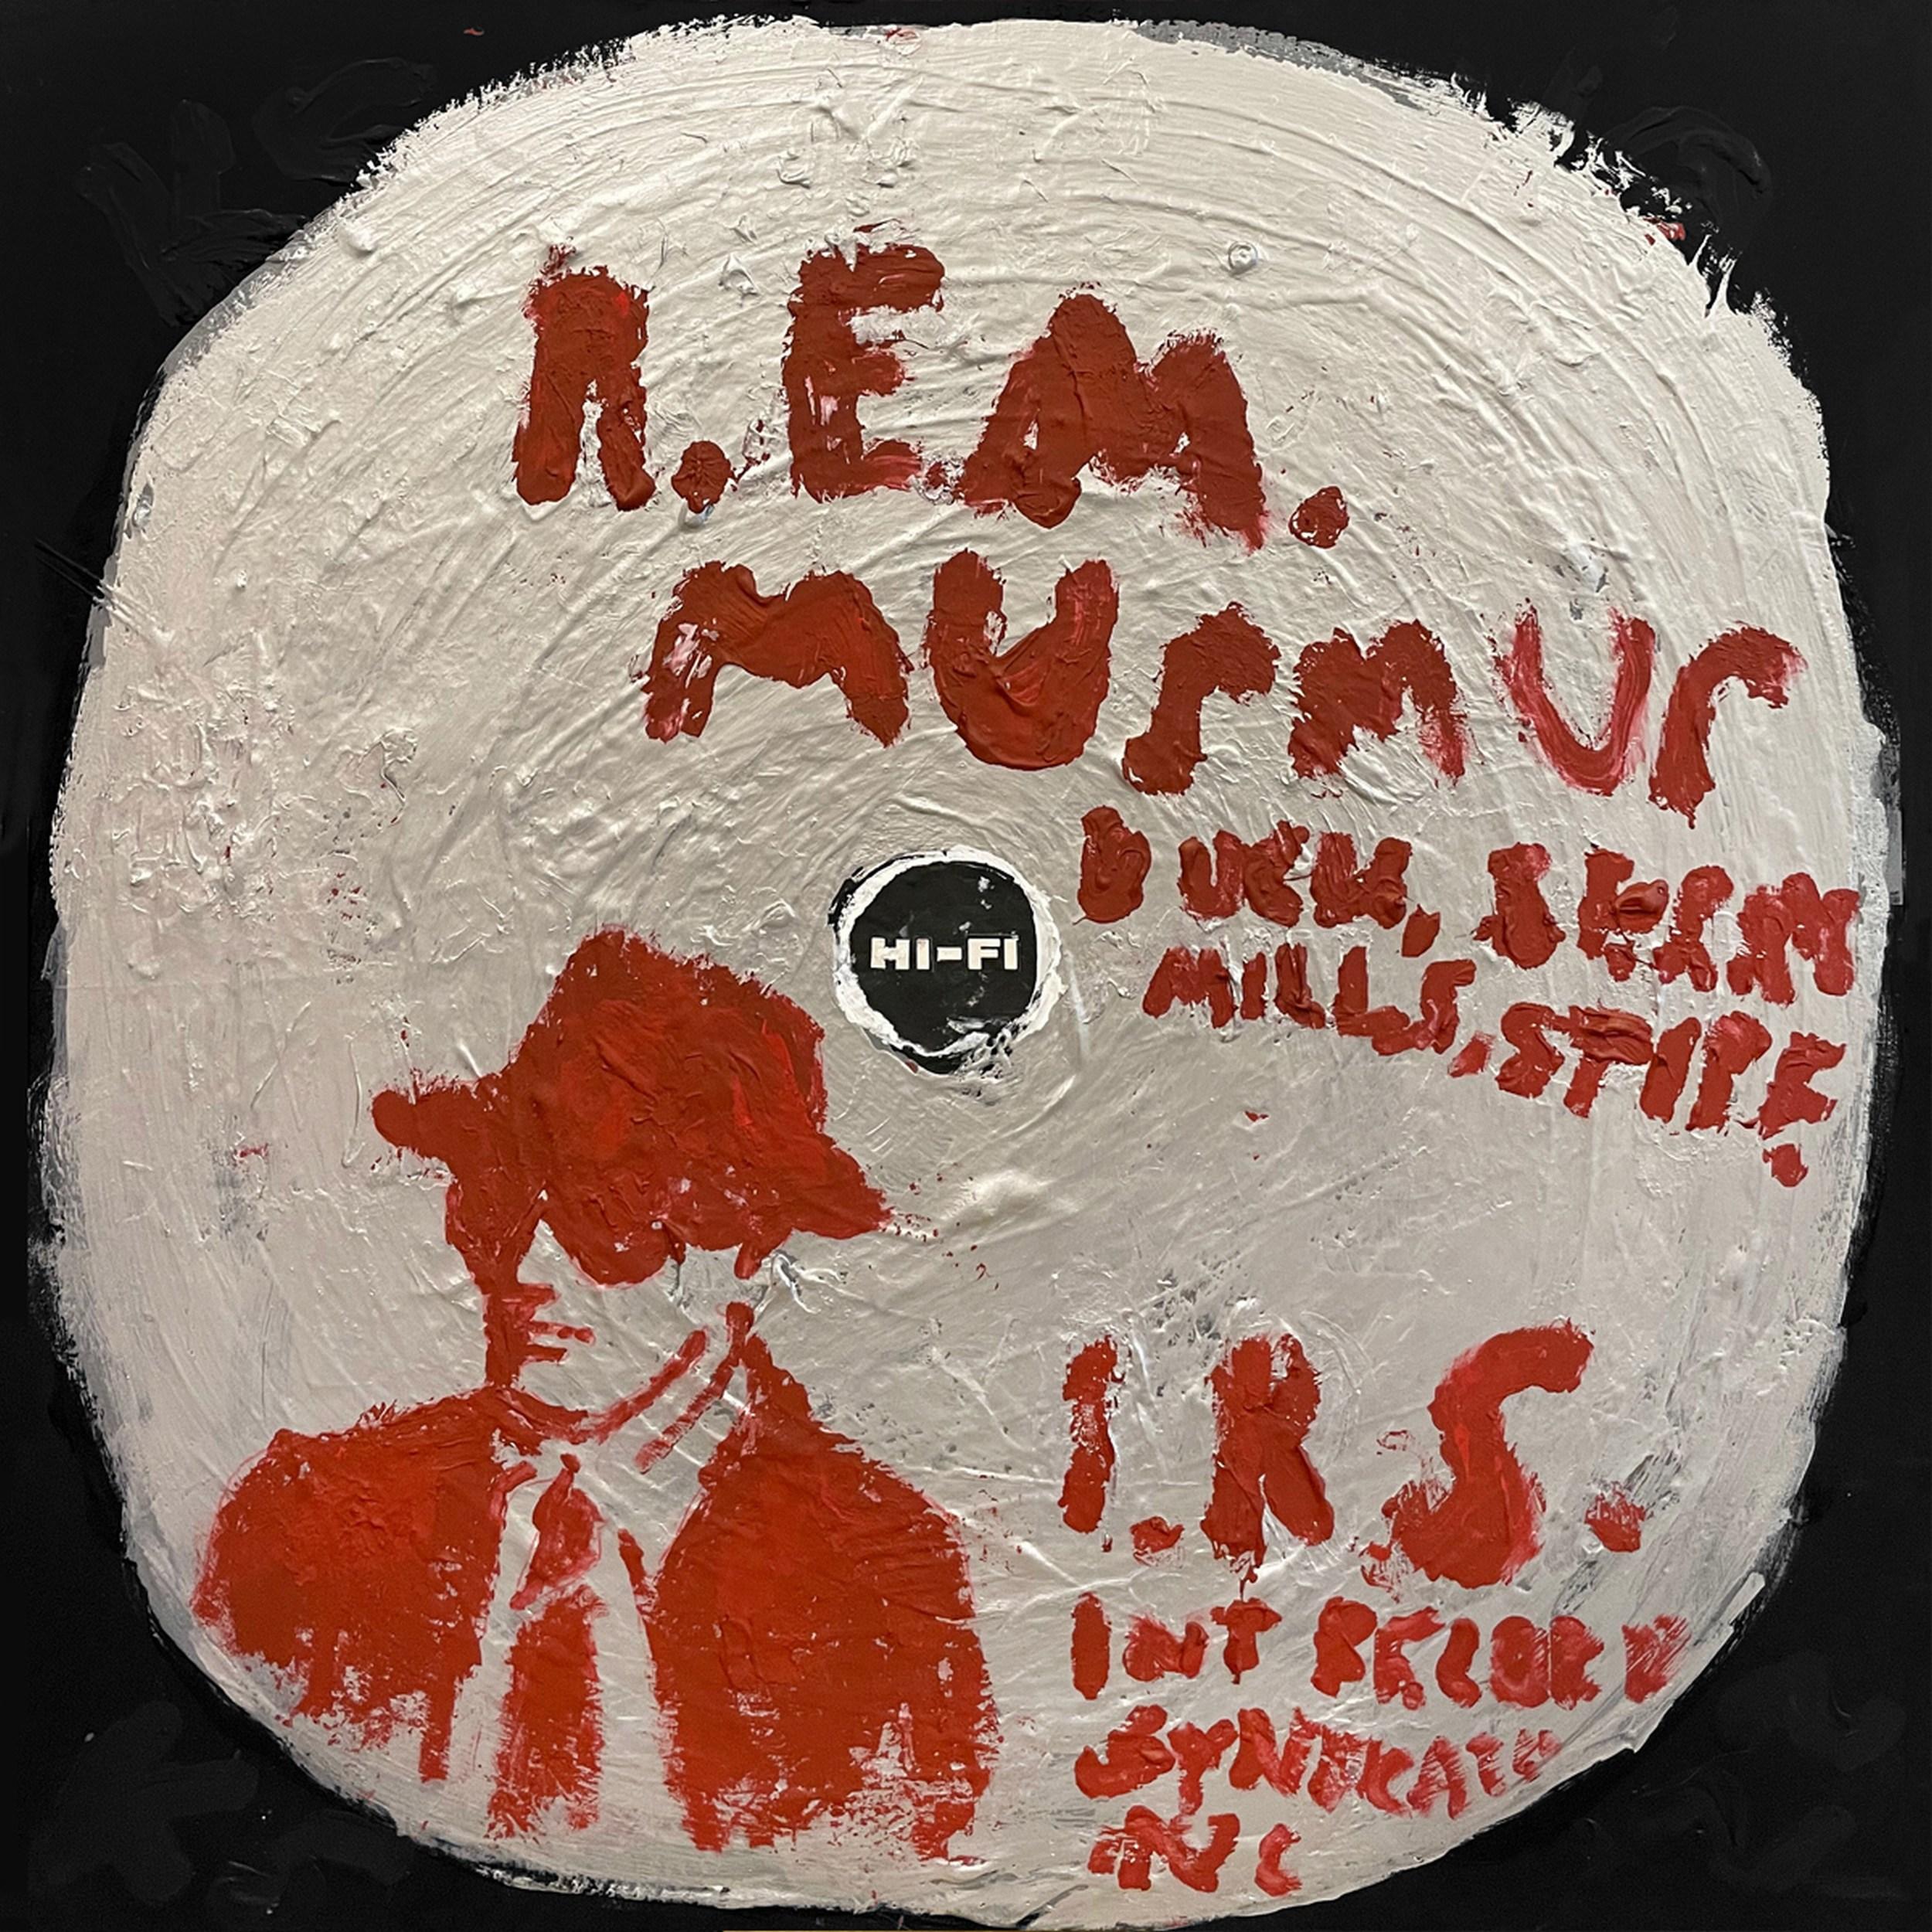 R.E.M. - Murmur (Grammy, Albumkunst, Iconic, Rock and Roll, Pop, Legendary)